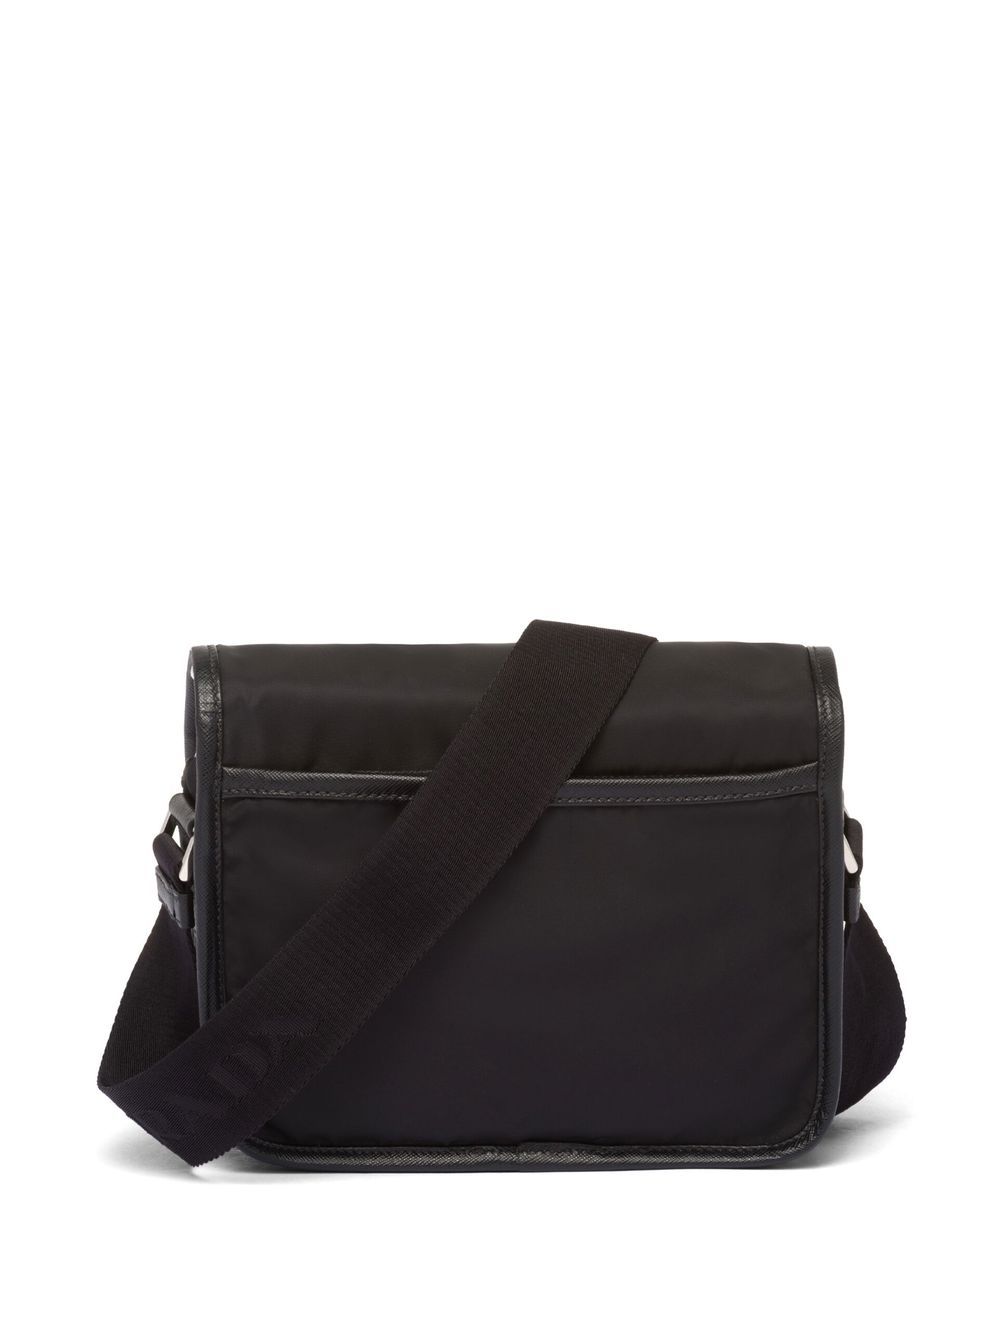 Prada Nylon Messenger Bag In F0002 Black